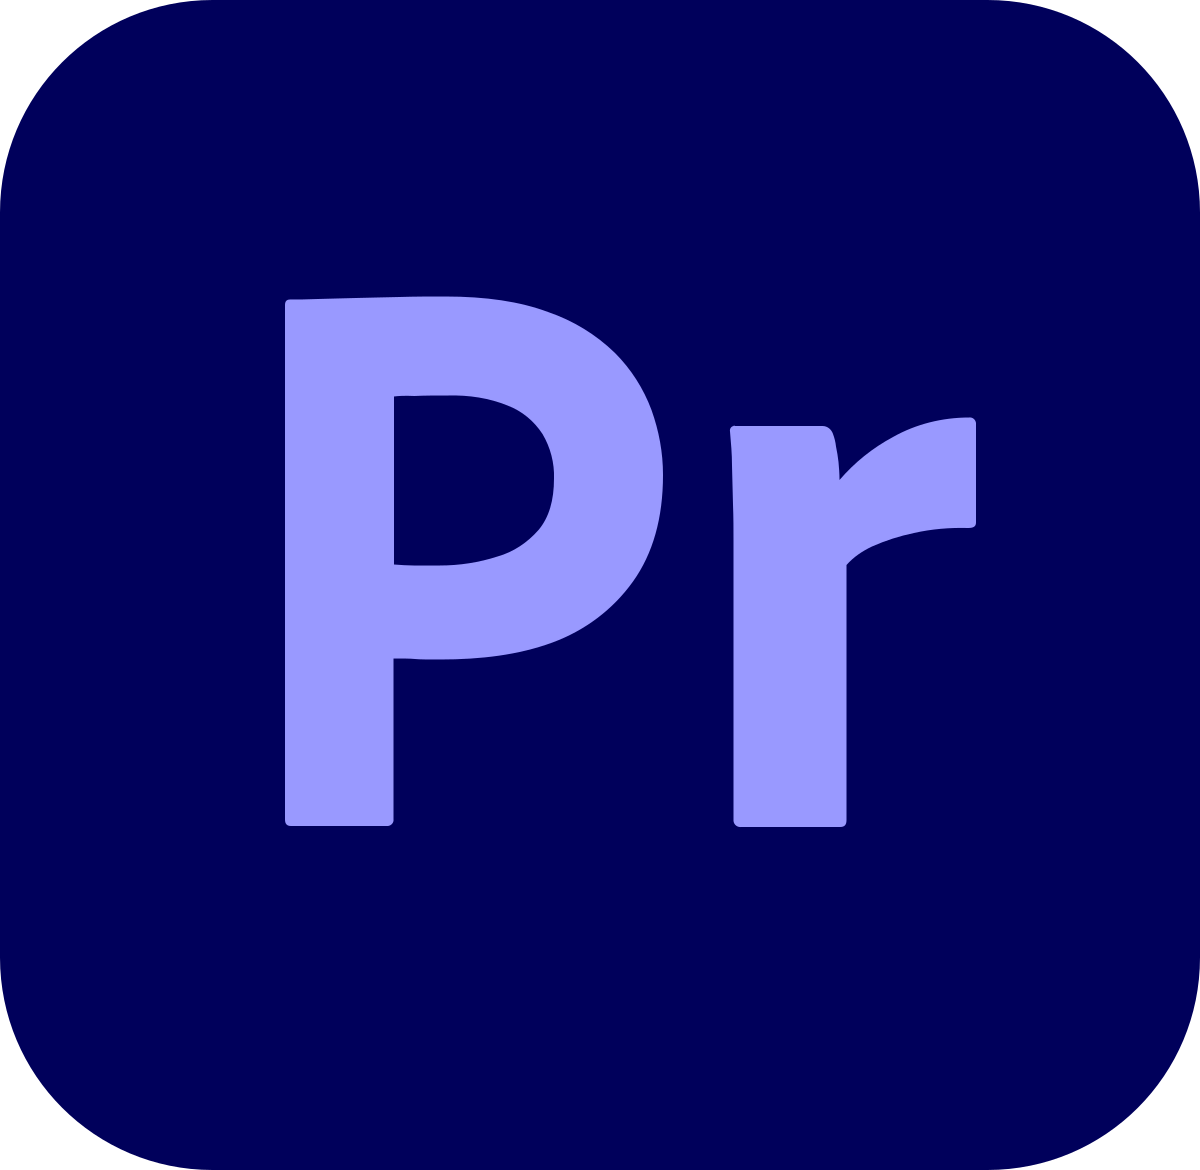 Adobe Premiere Pro training